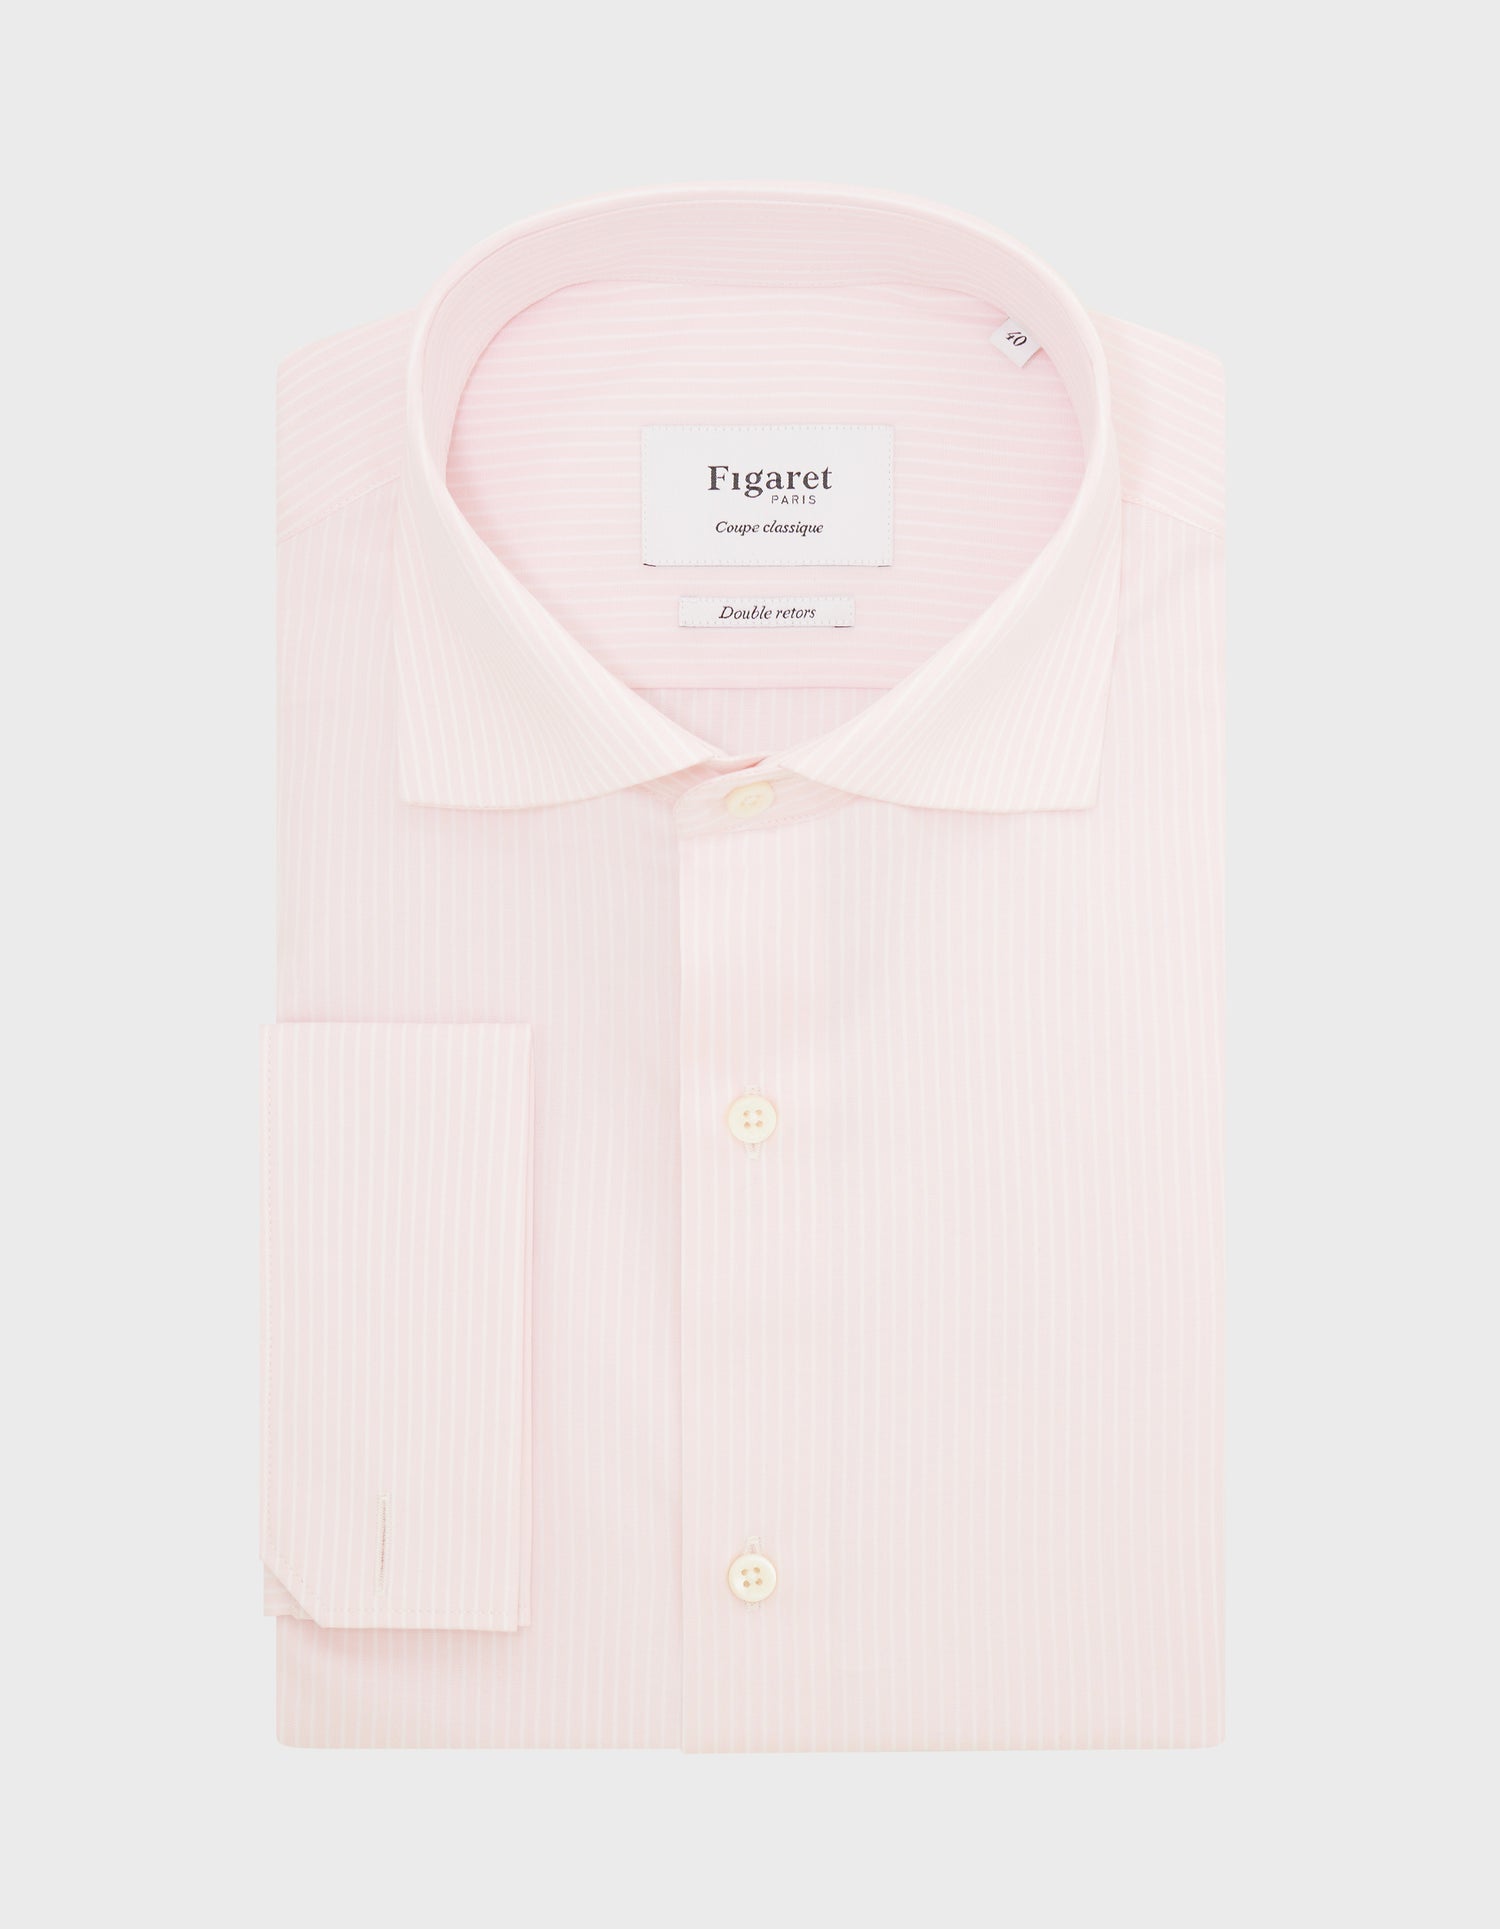 Classic pink striped shirt - Poplin - Italian Collar - French Cuffs